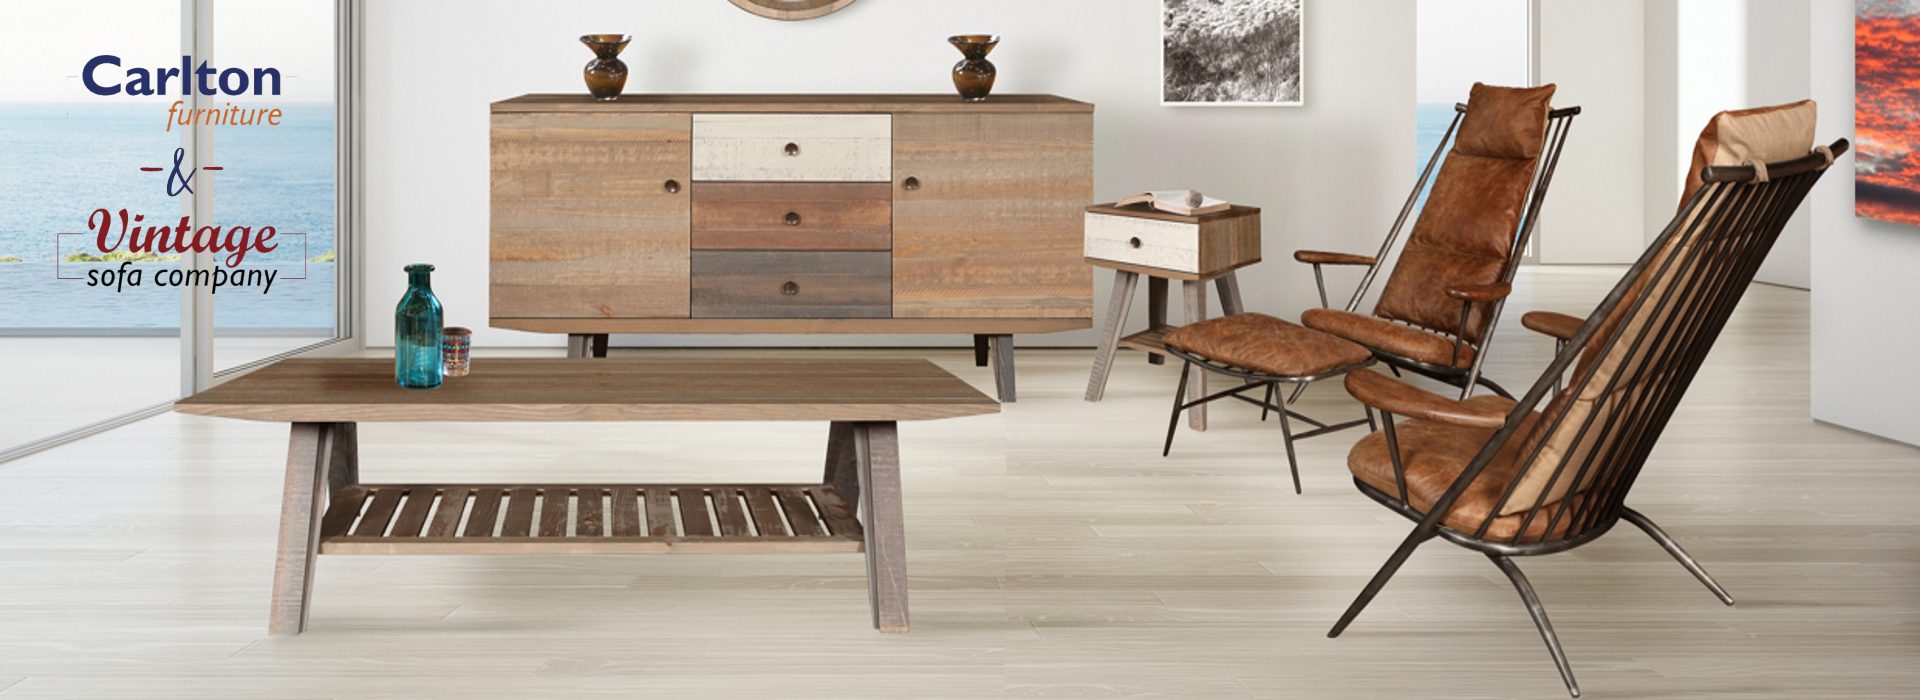 Furniture designed for you